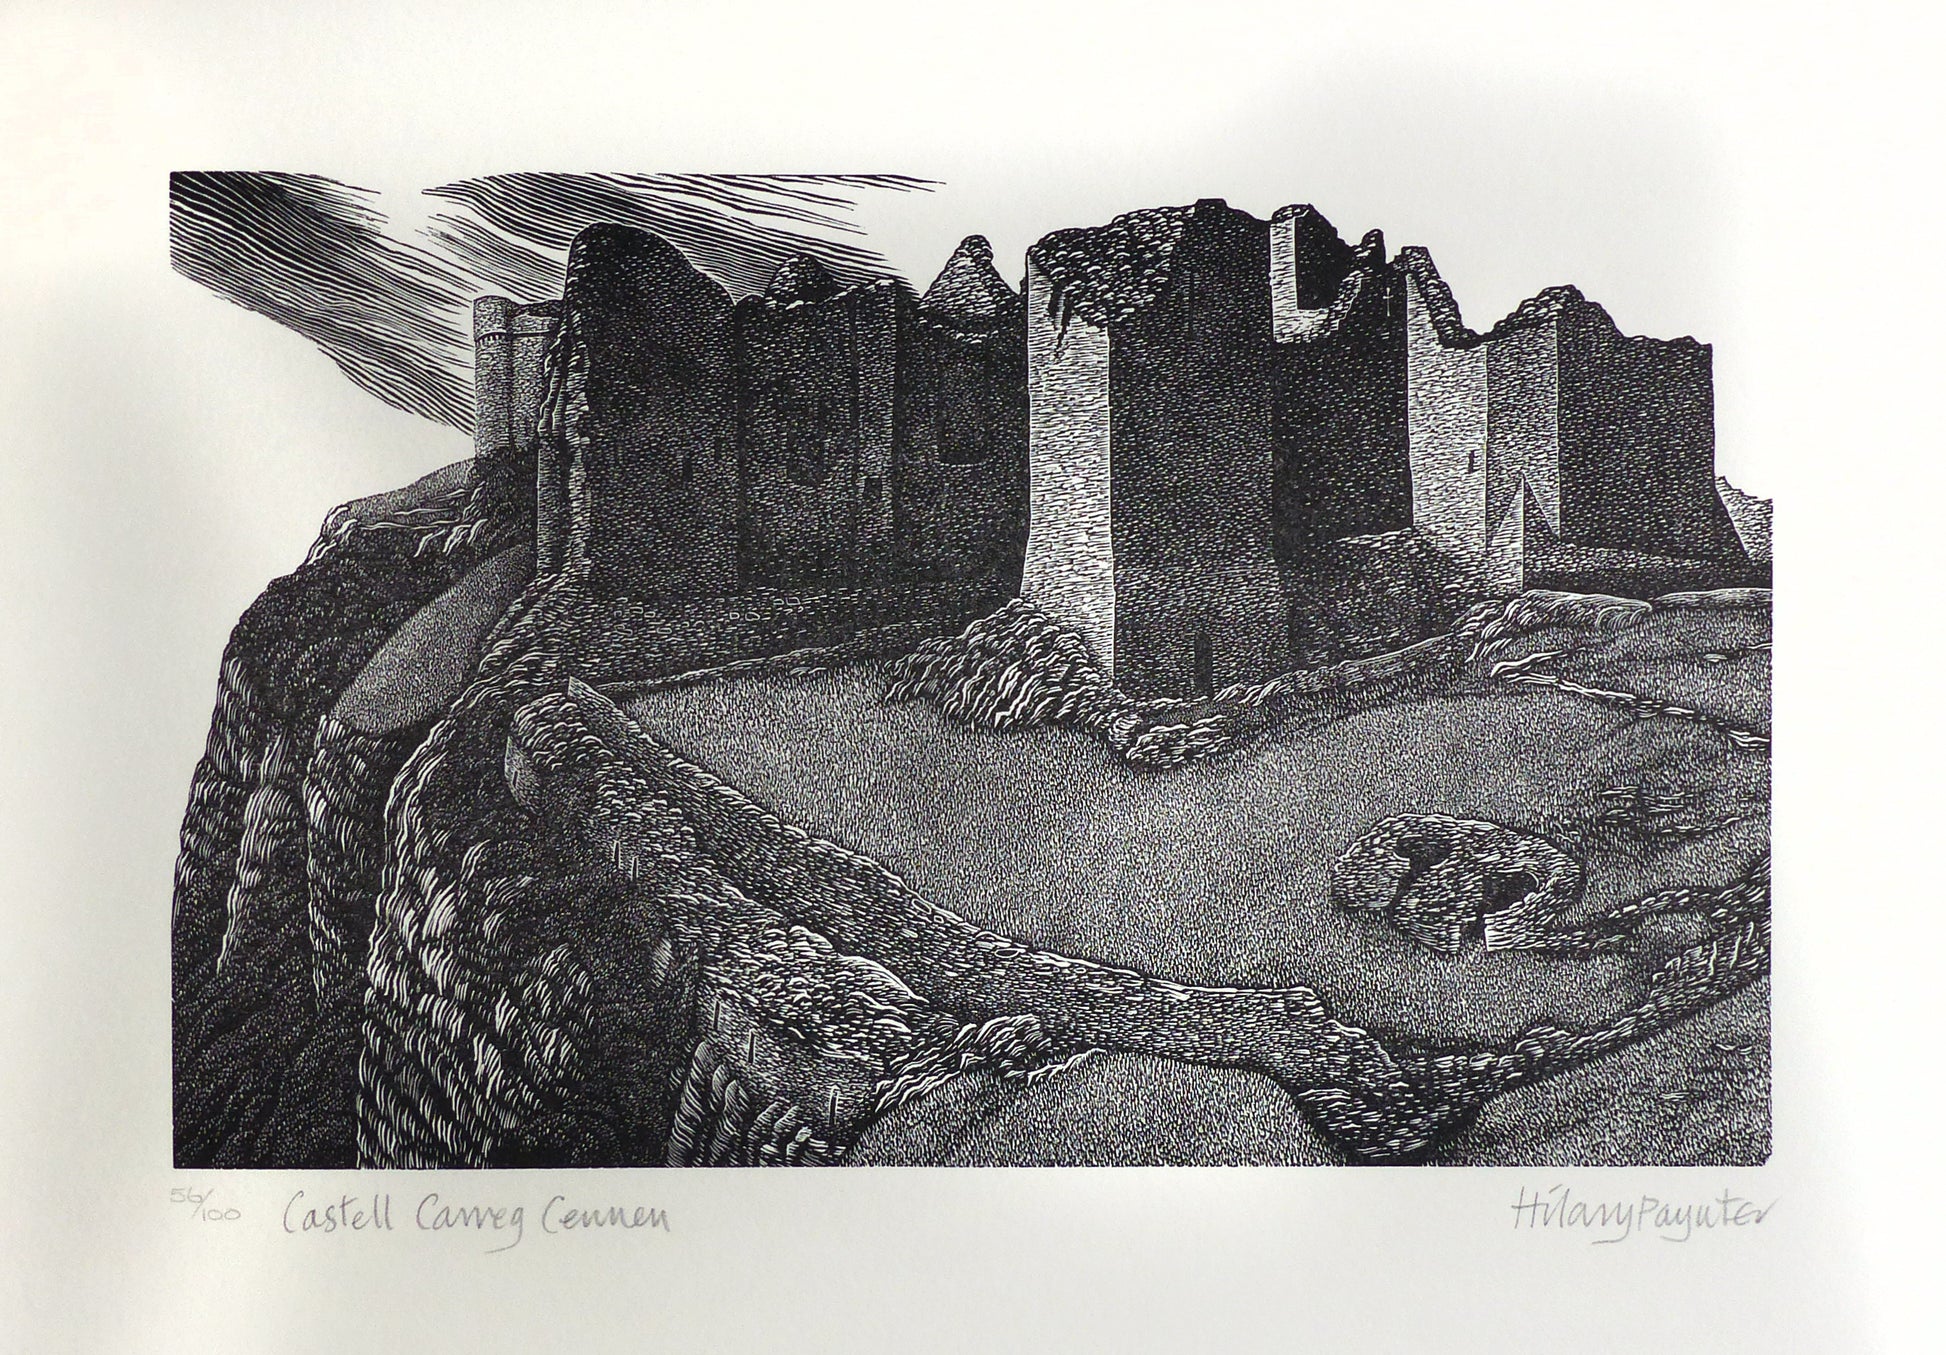 Hilary Paynter Wood Engraving: Castell Carreg Cemmen